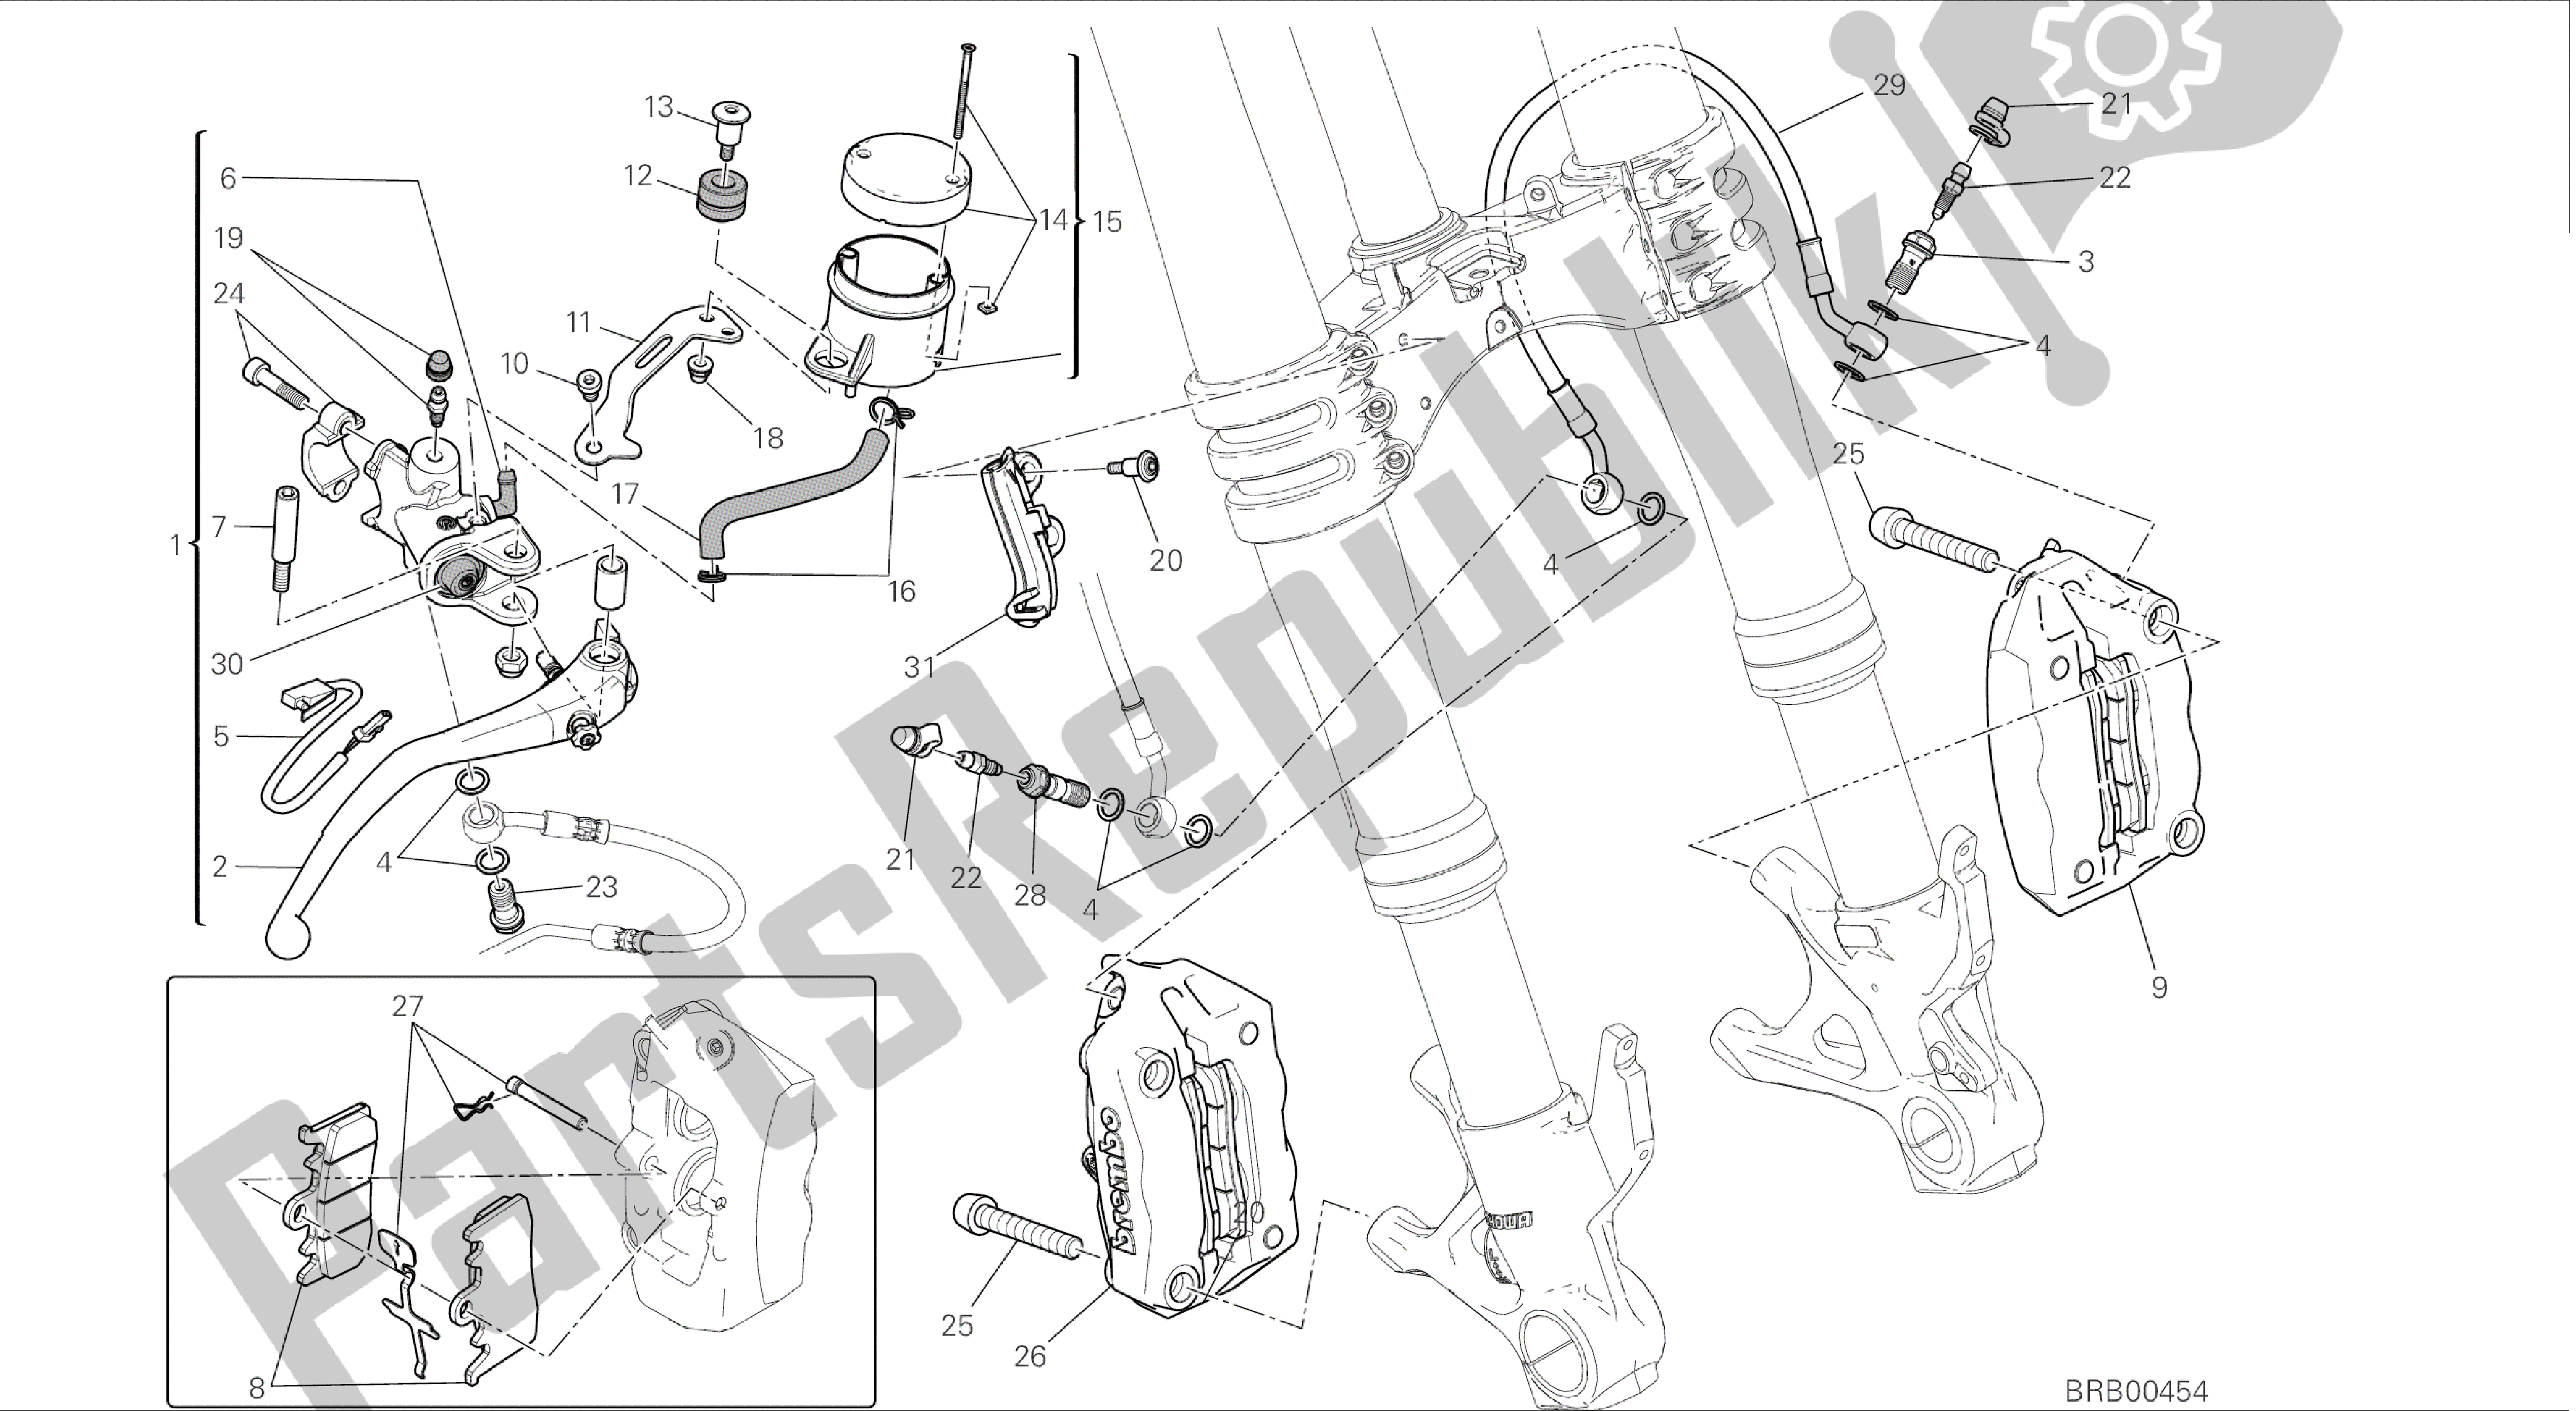 Alle onderdelen voor de Tekening 024 - Freno Anteriore [mod: 899 Abs; Xst: Aus, Eur, Fra, Jap, Twn] Groepsframe van de Ducati Panigale 899 2014